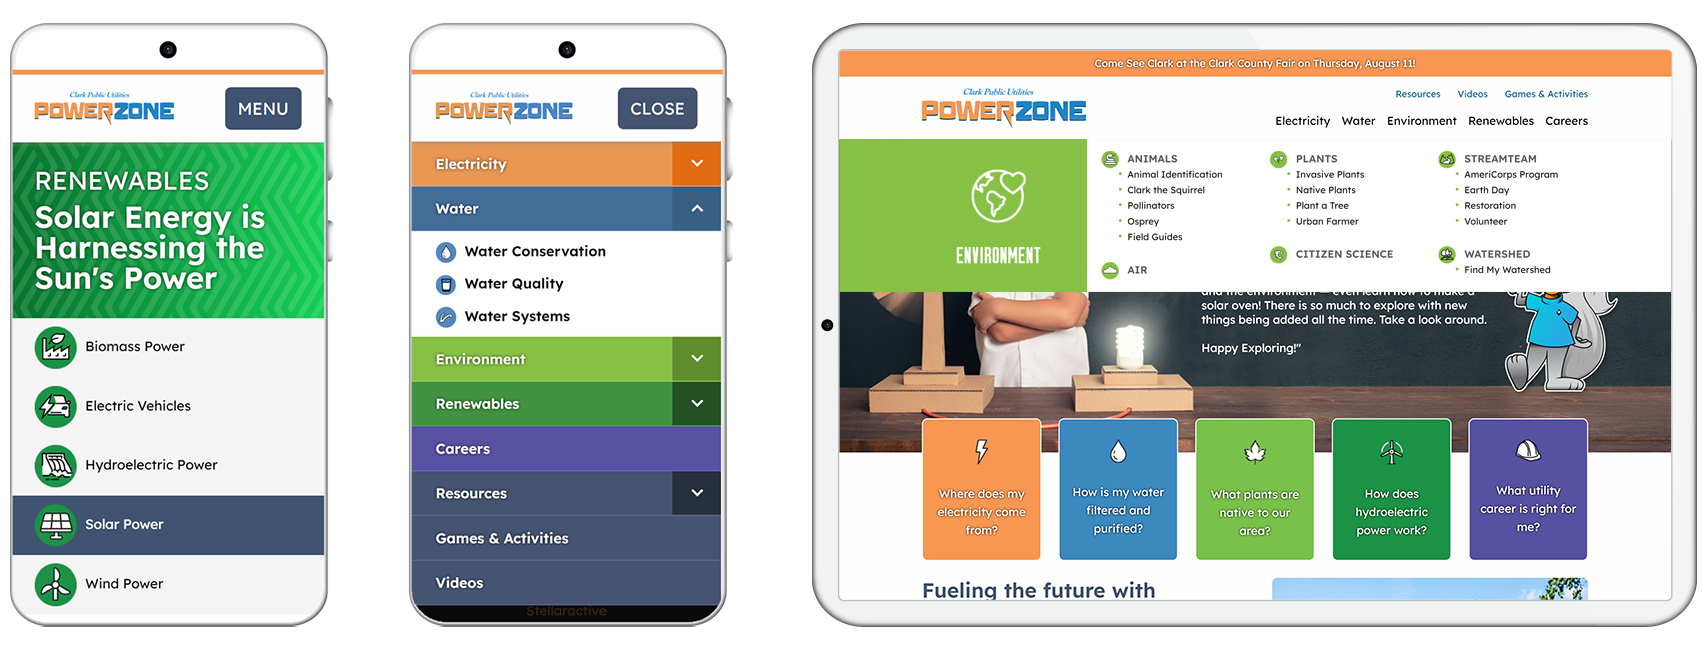 Portfolio website design tablet and mobile Clark PowerZone